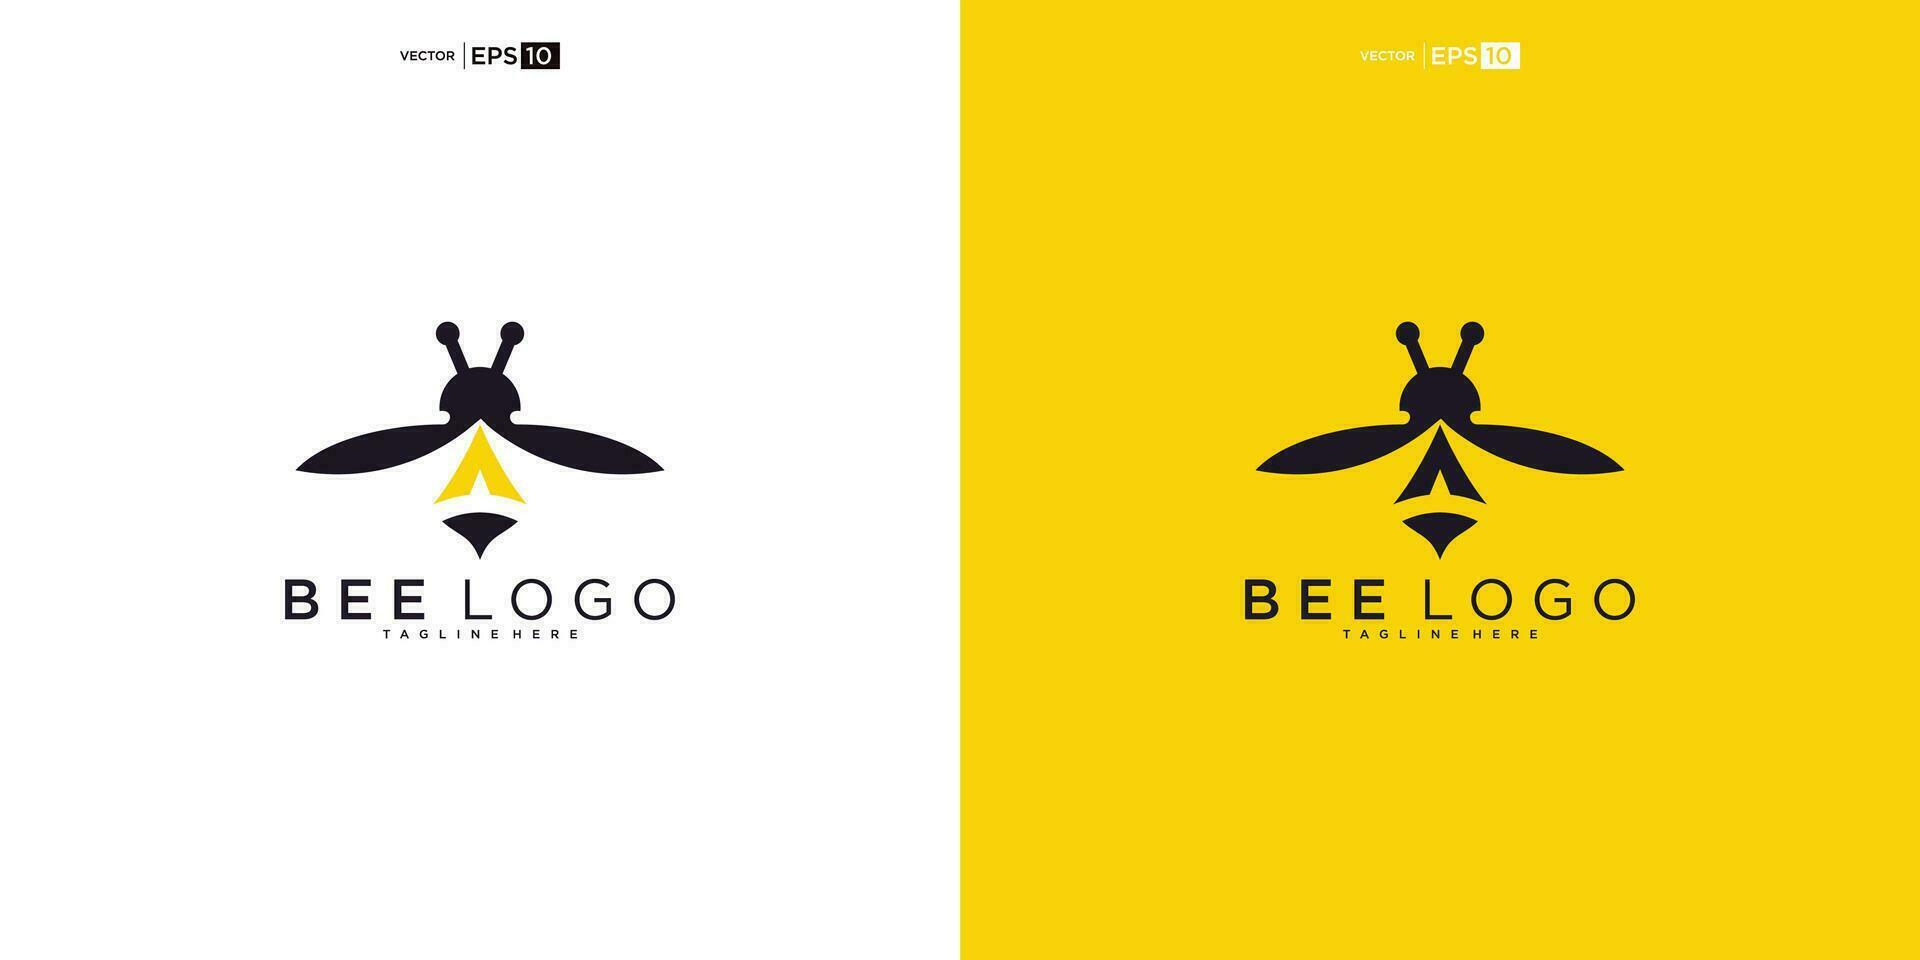 honung bi djur logotyp design vektor